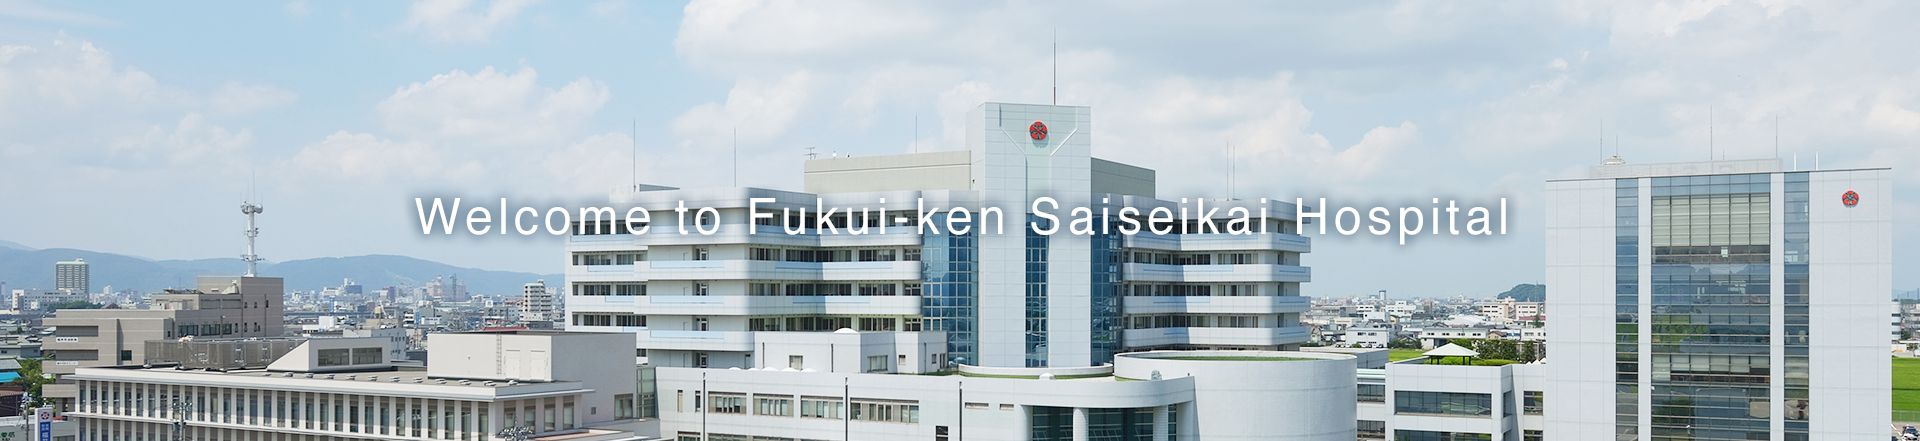 Welcome to Fukui-ken Saiseikai Hospital